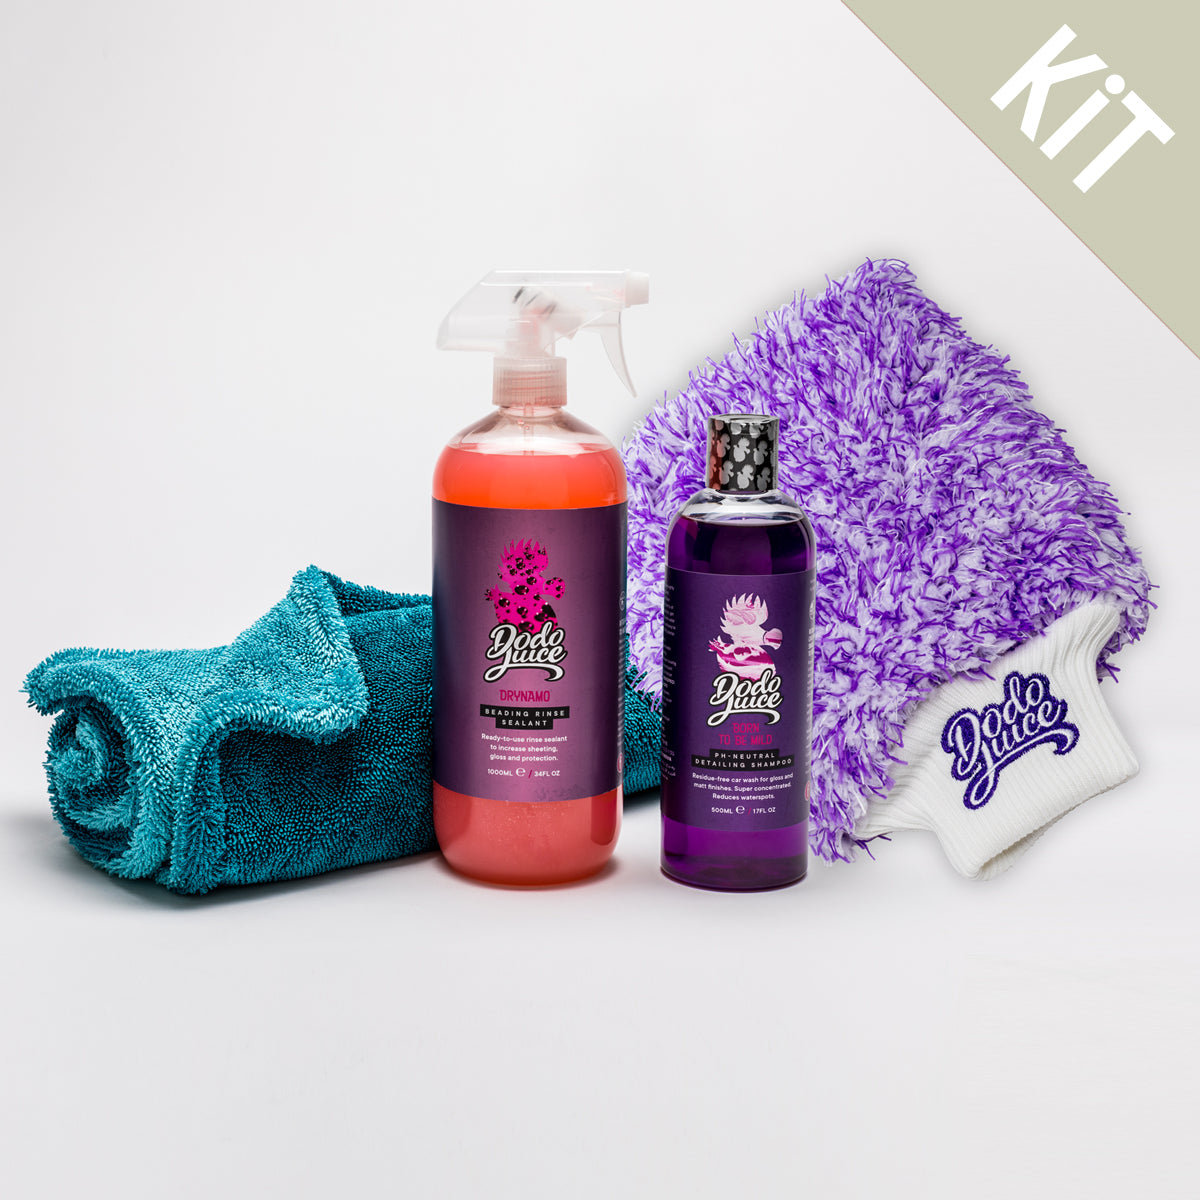 Wash Boss kit - shampoo, mitt and towel wash stage bundle (4 items) - up to £8 saving HS 3405300000